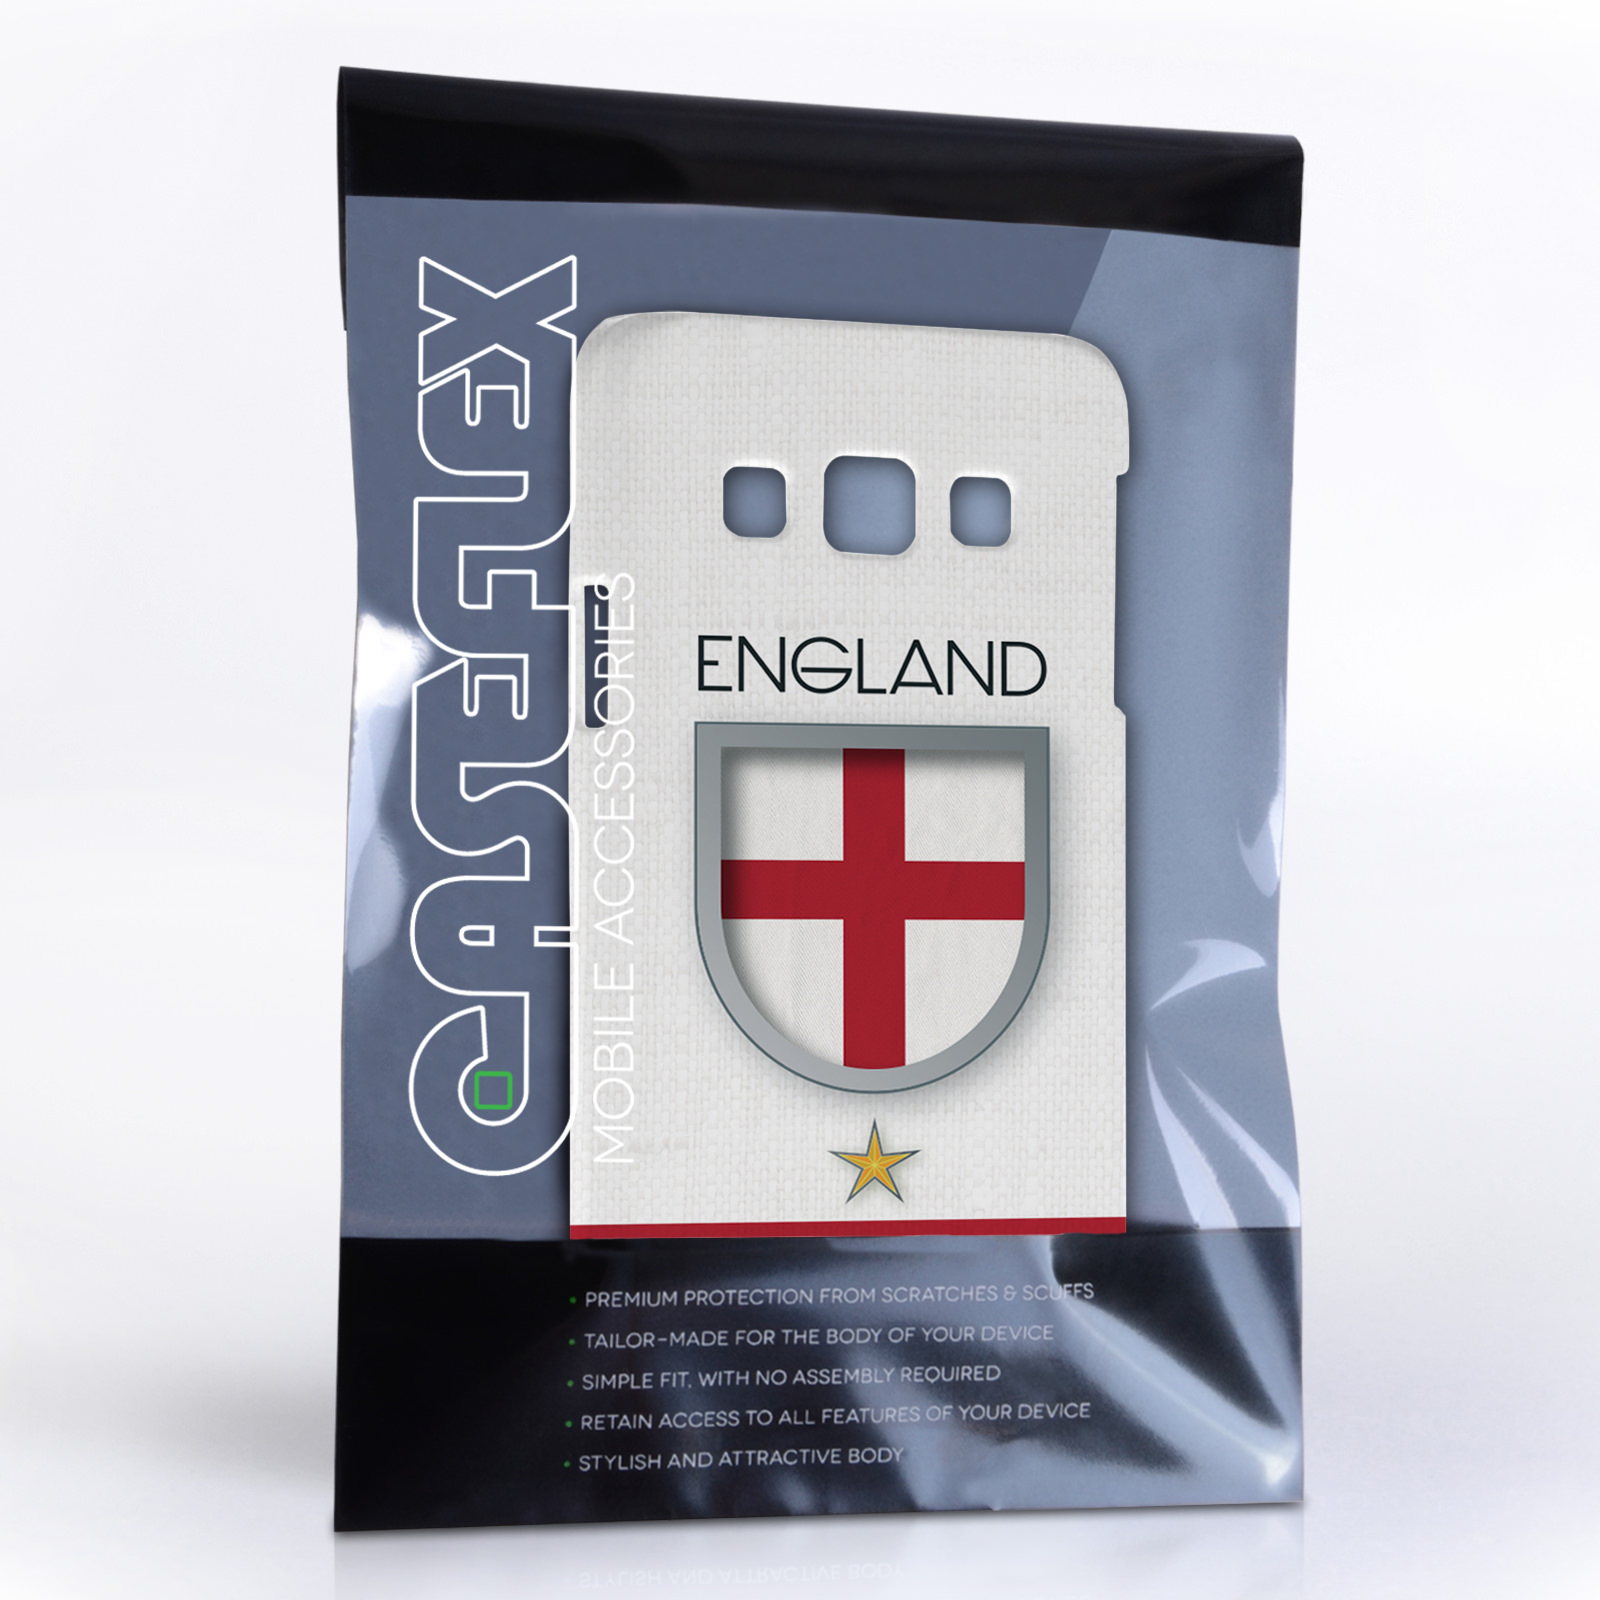 Caseflex Samsung Galaxy A3 England World Cup Case